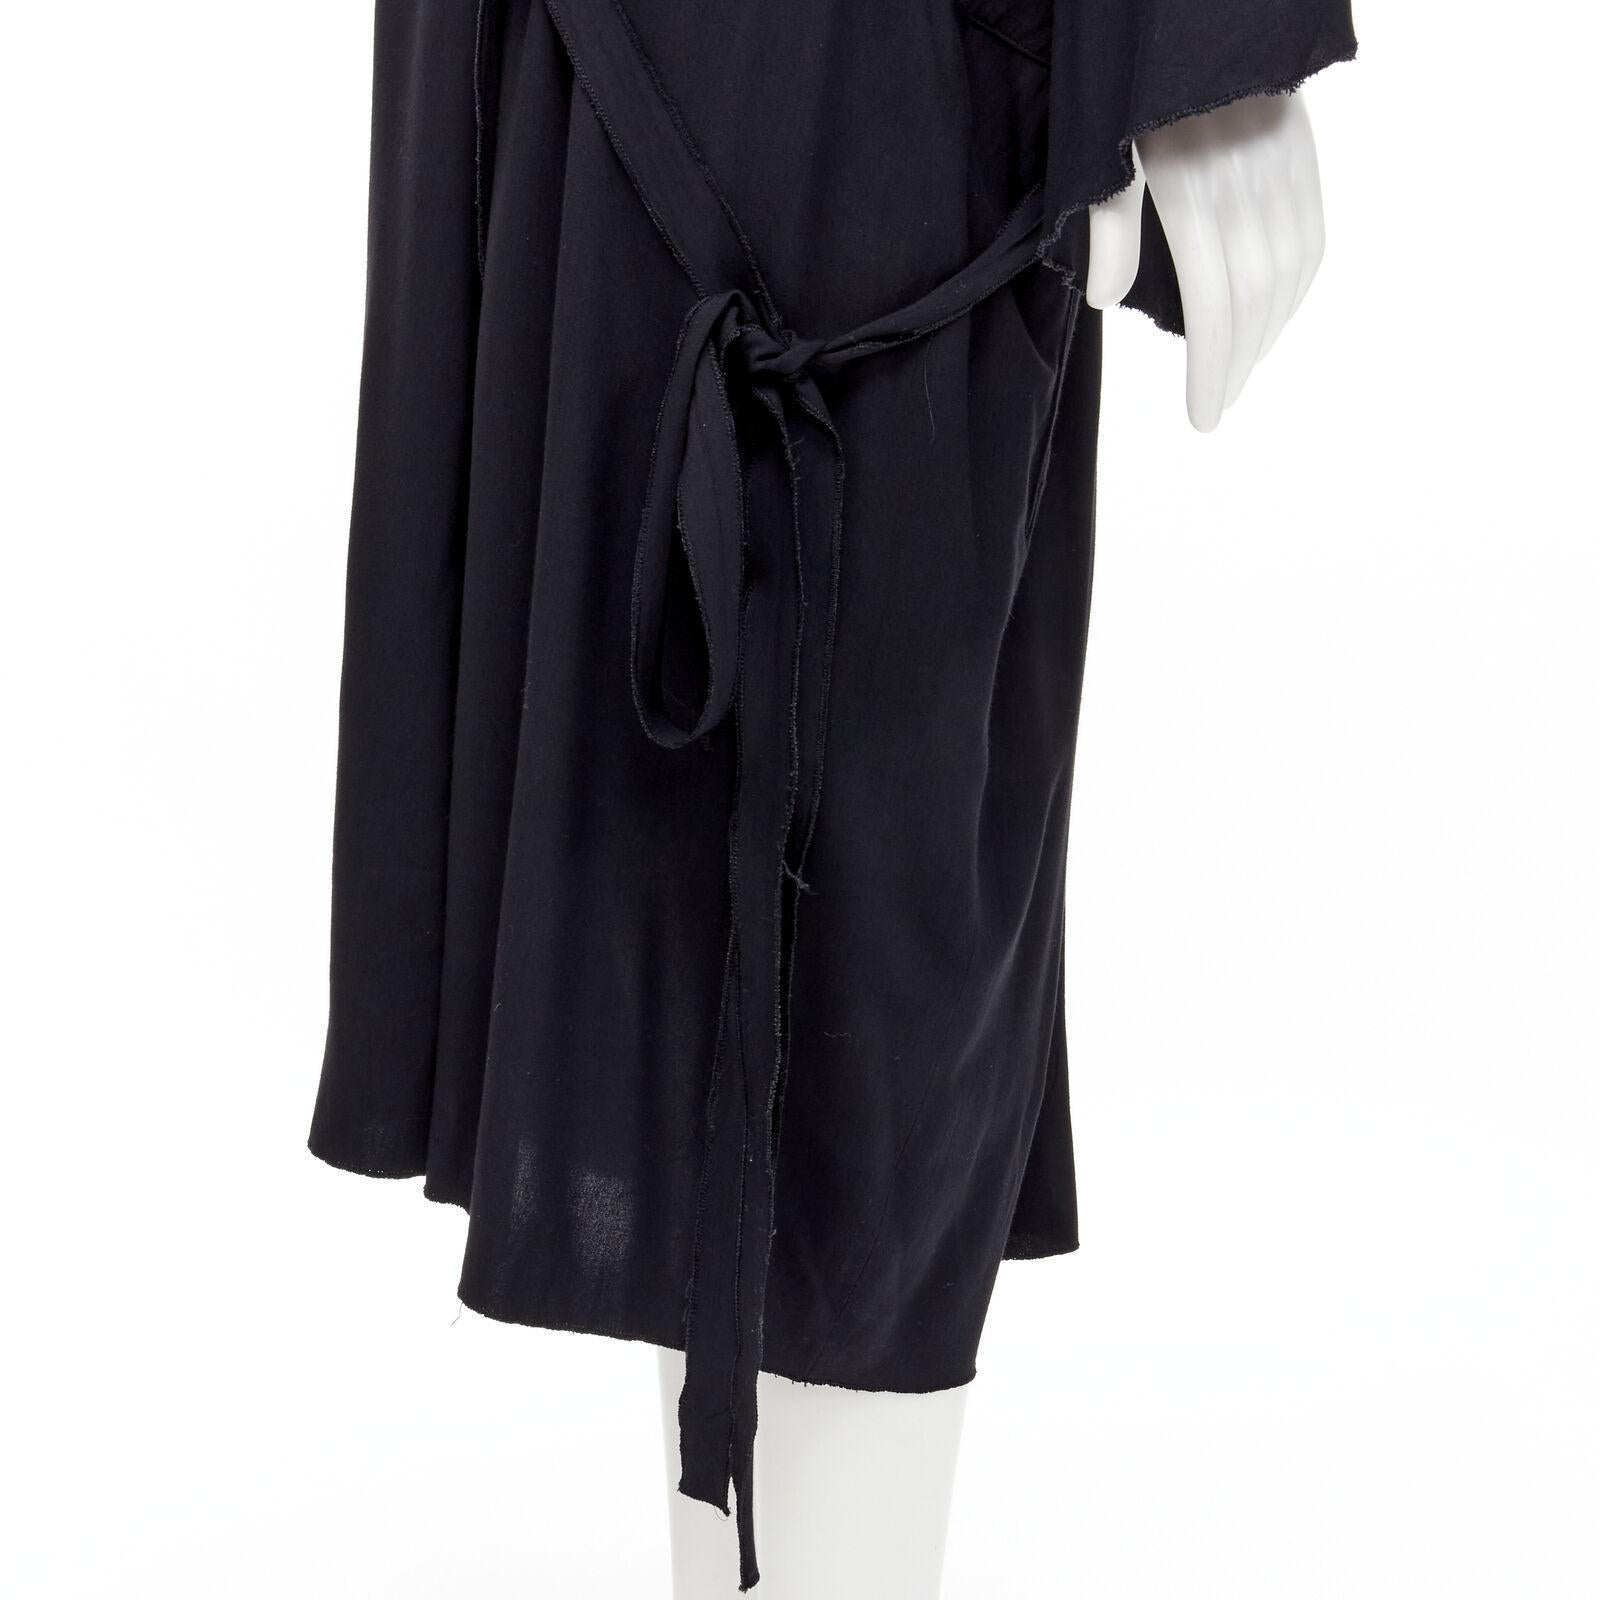 rare COMME DES GARCONS Vintage 1980's black asymmetric wrap kimono robe dress
Reference: CRTI/A00698
Brand: Comme Des Garcons
Designer: Rei Kawakubo
Collection: 1980s
Material: Rayon
Color: Black
Pattern: Solid
Closure: Wrap Tie
Extra Details: Dual